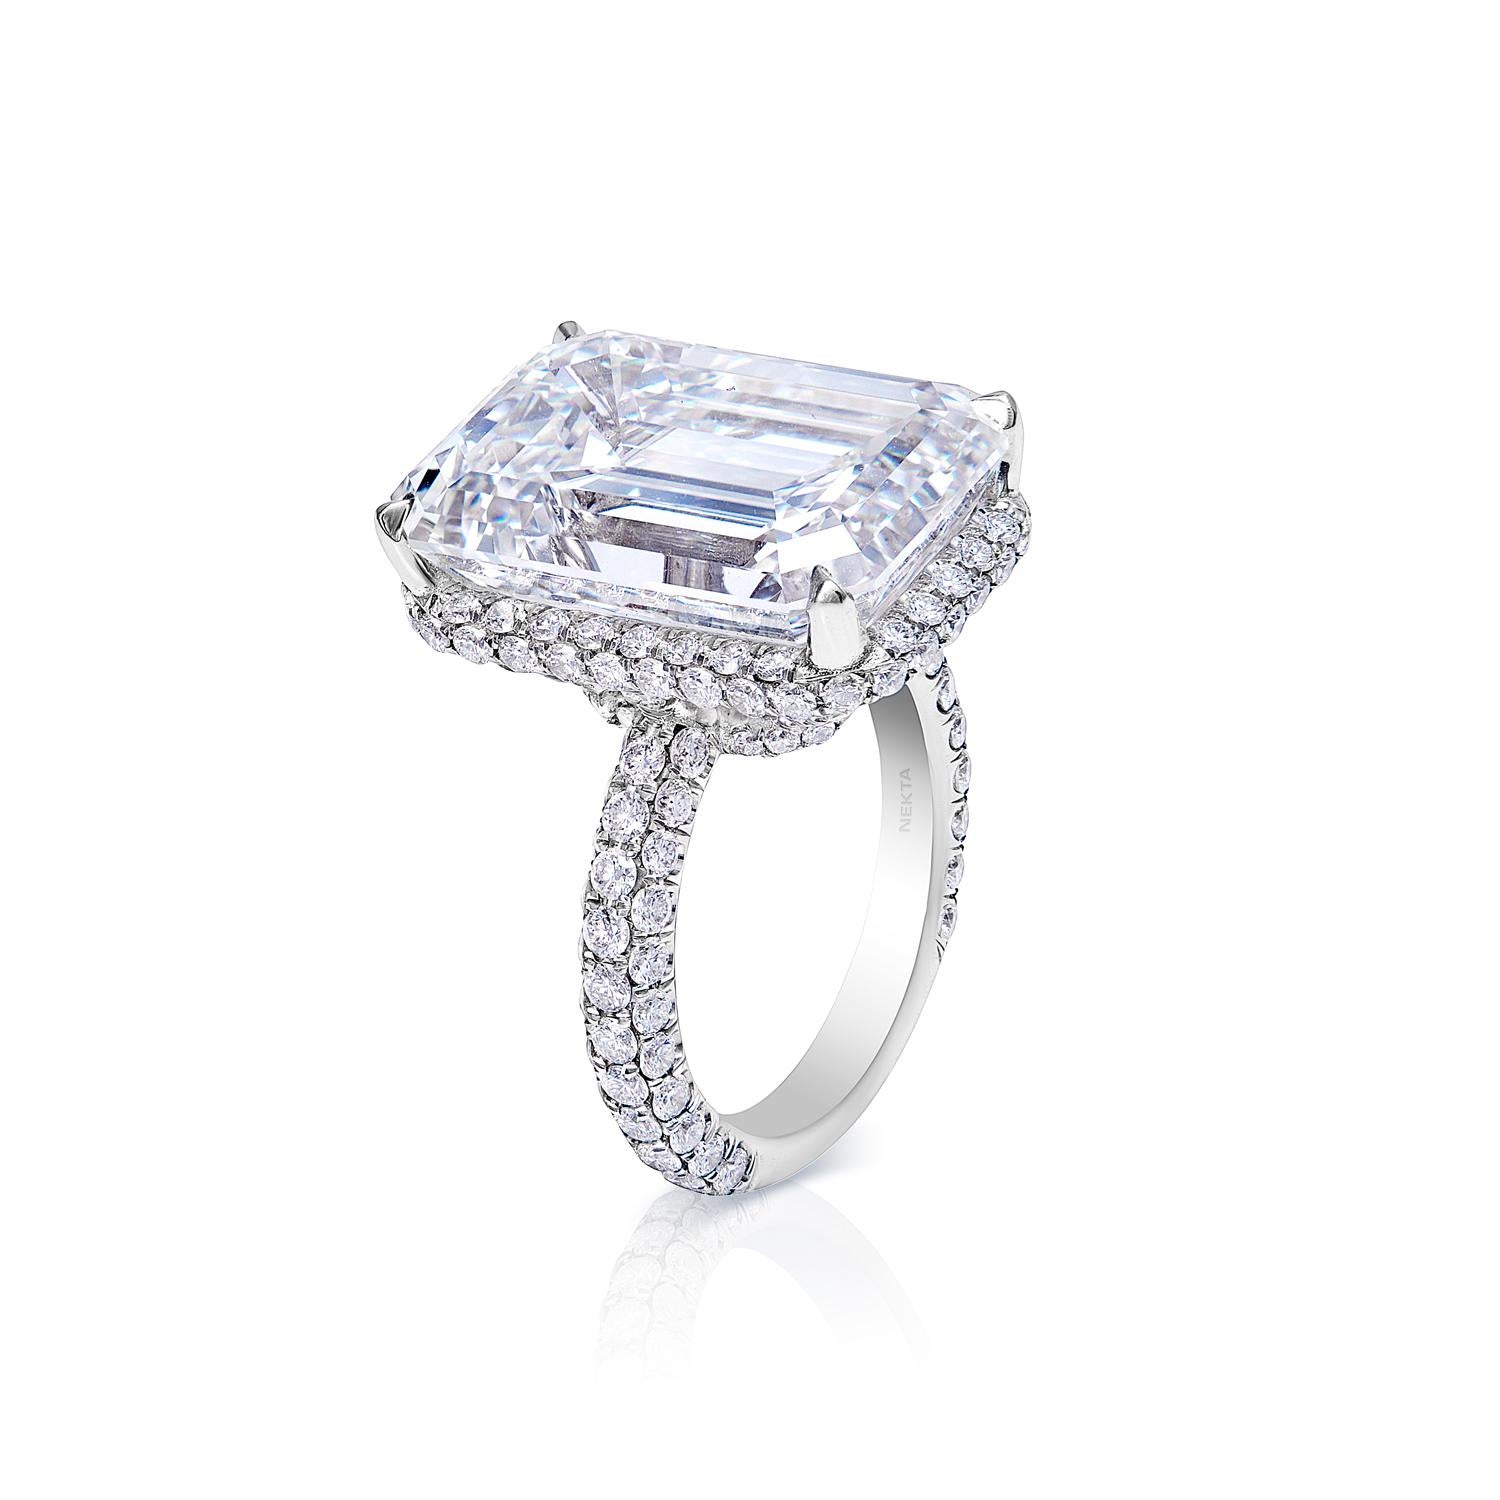 23 carat diamond ring